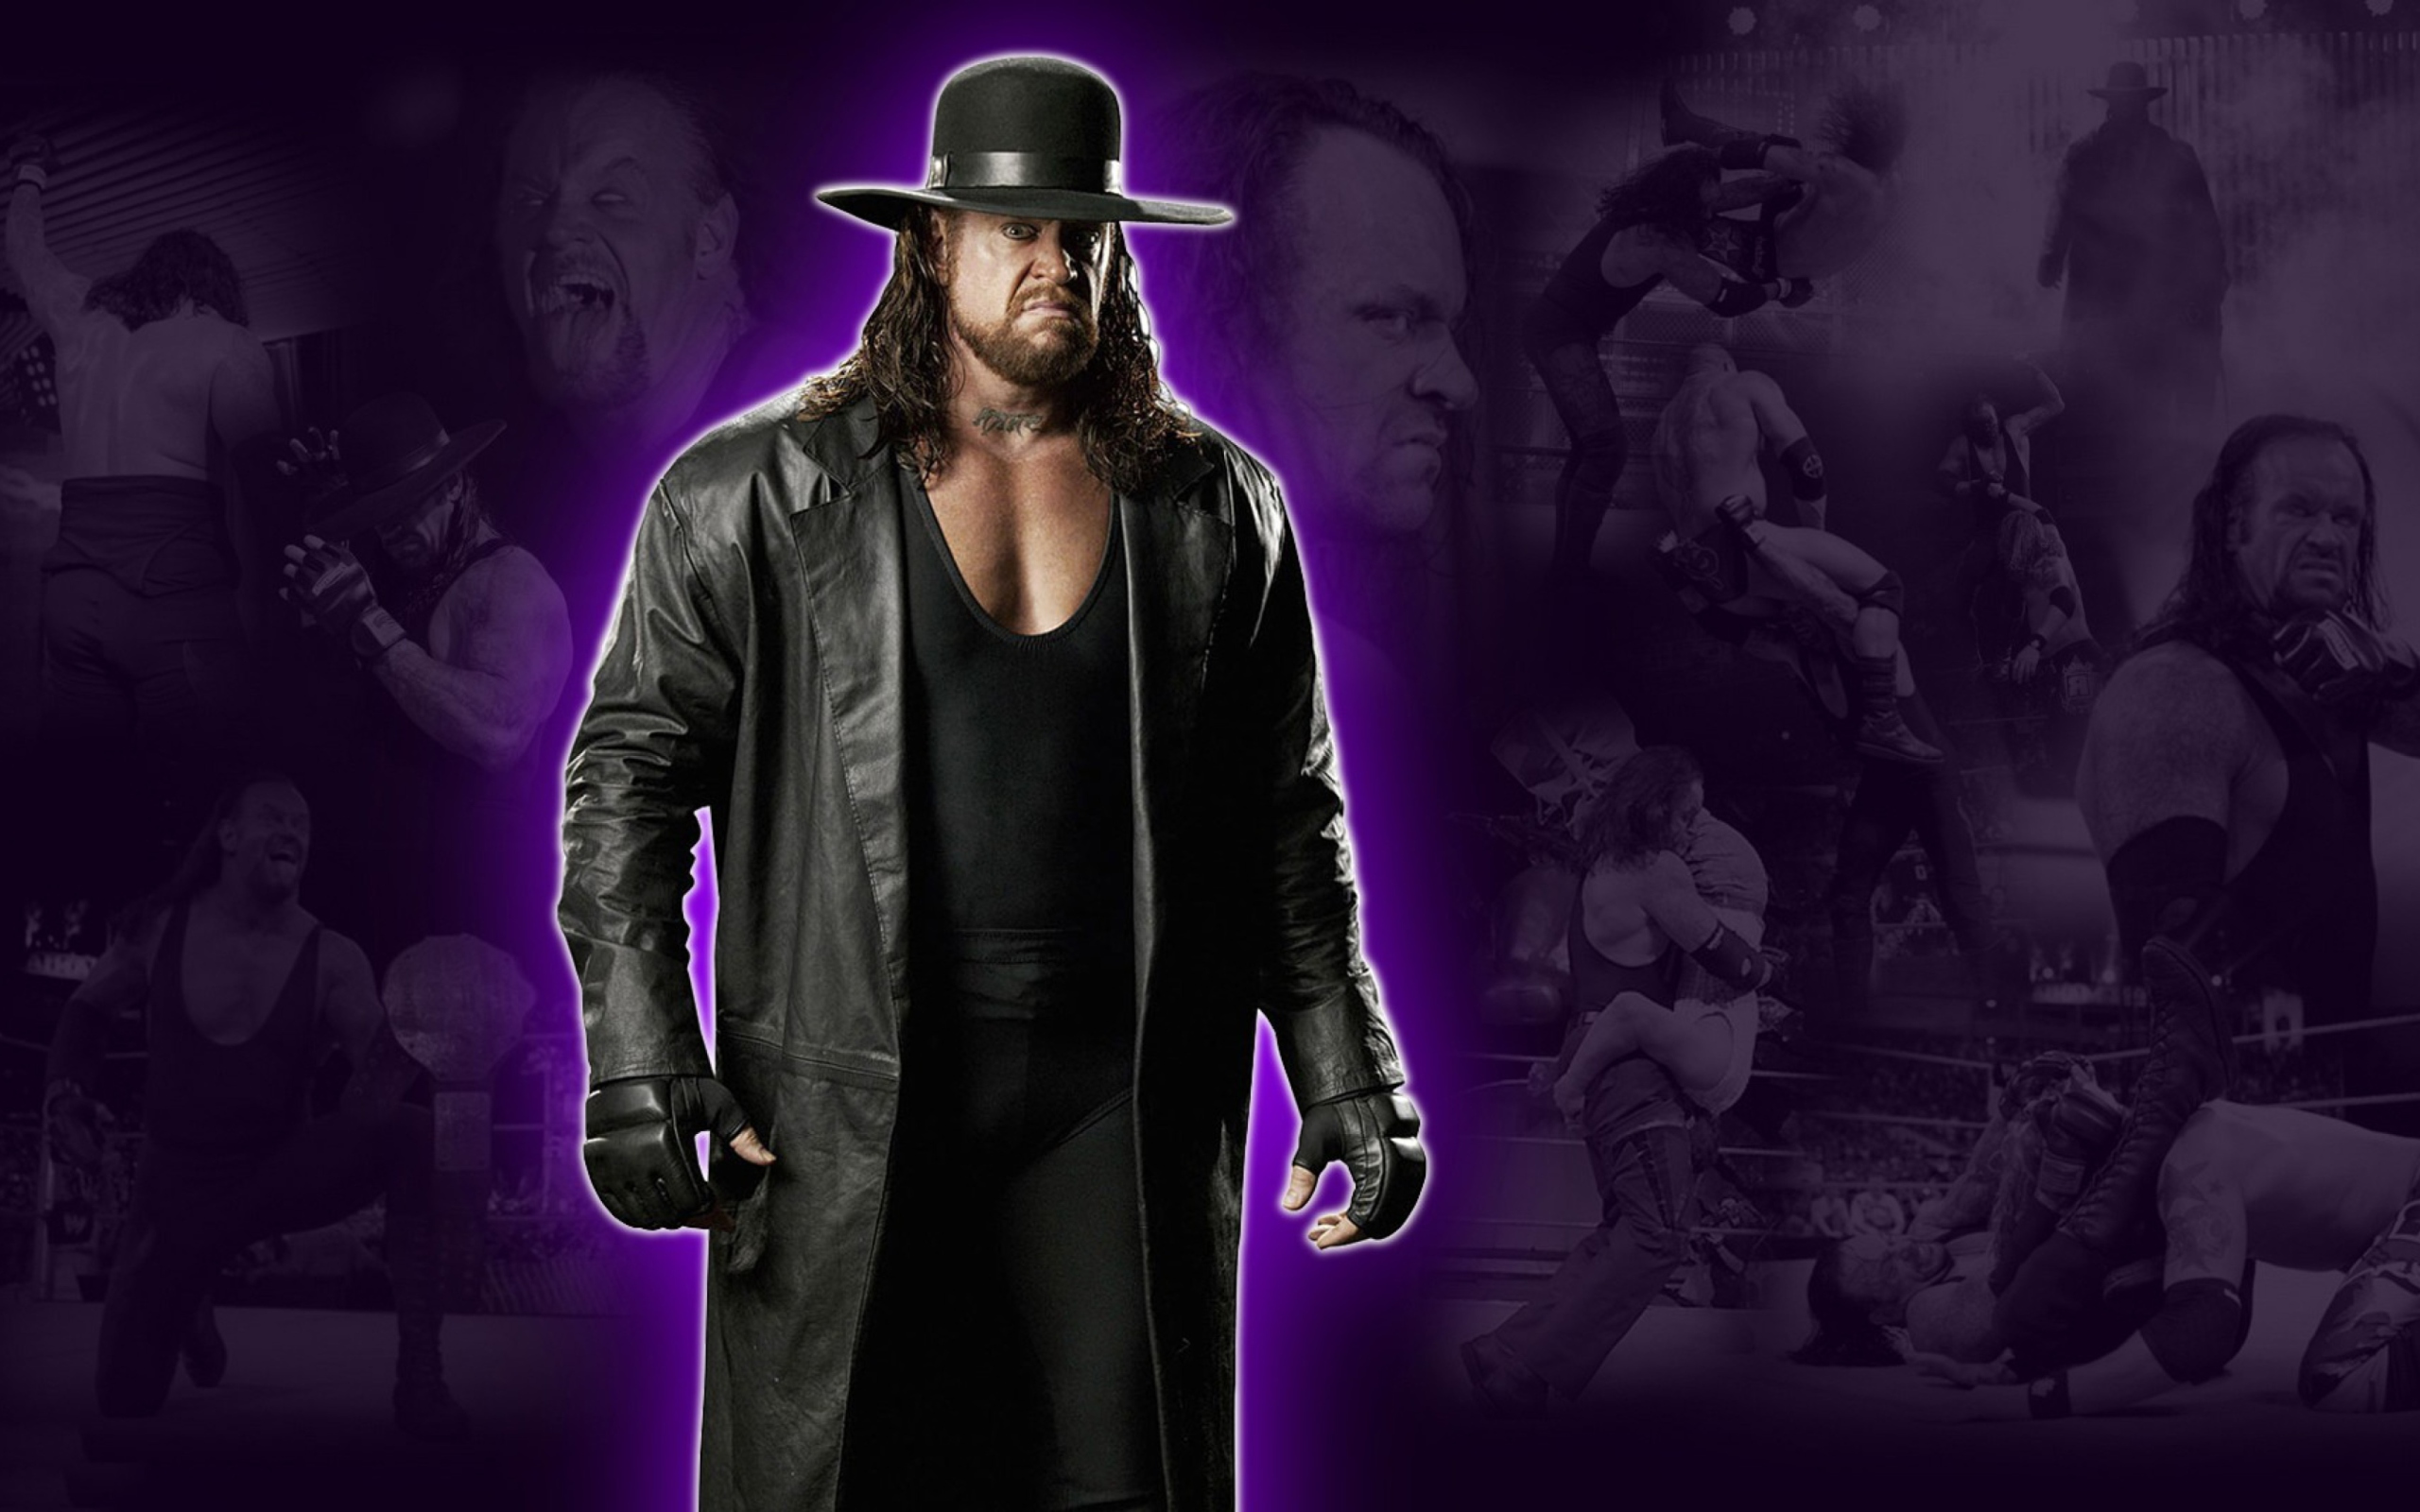 Undertaker Wwe Champion wallpaper 2560x1600